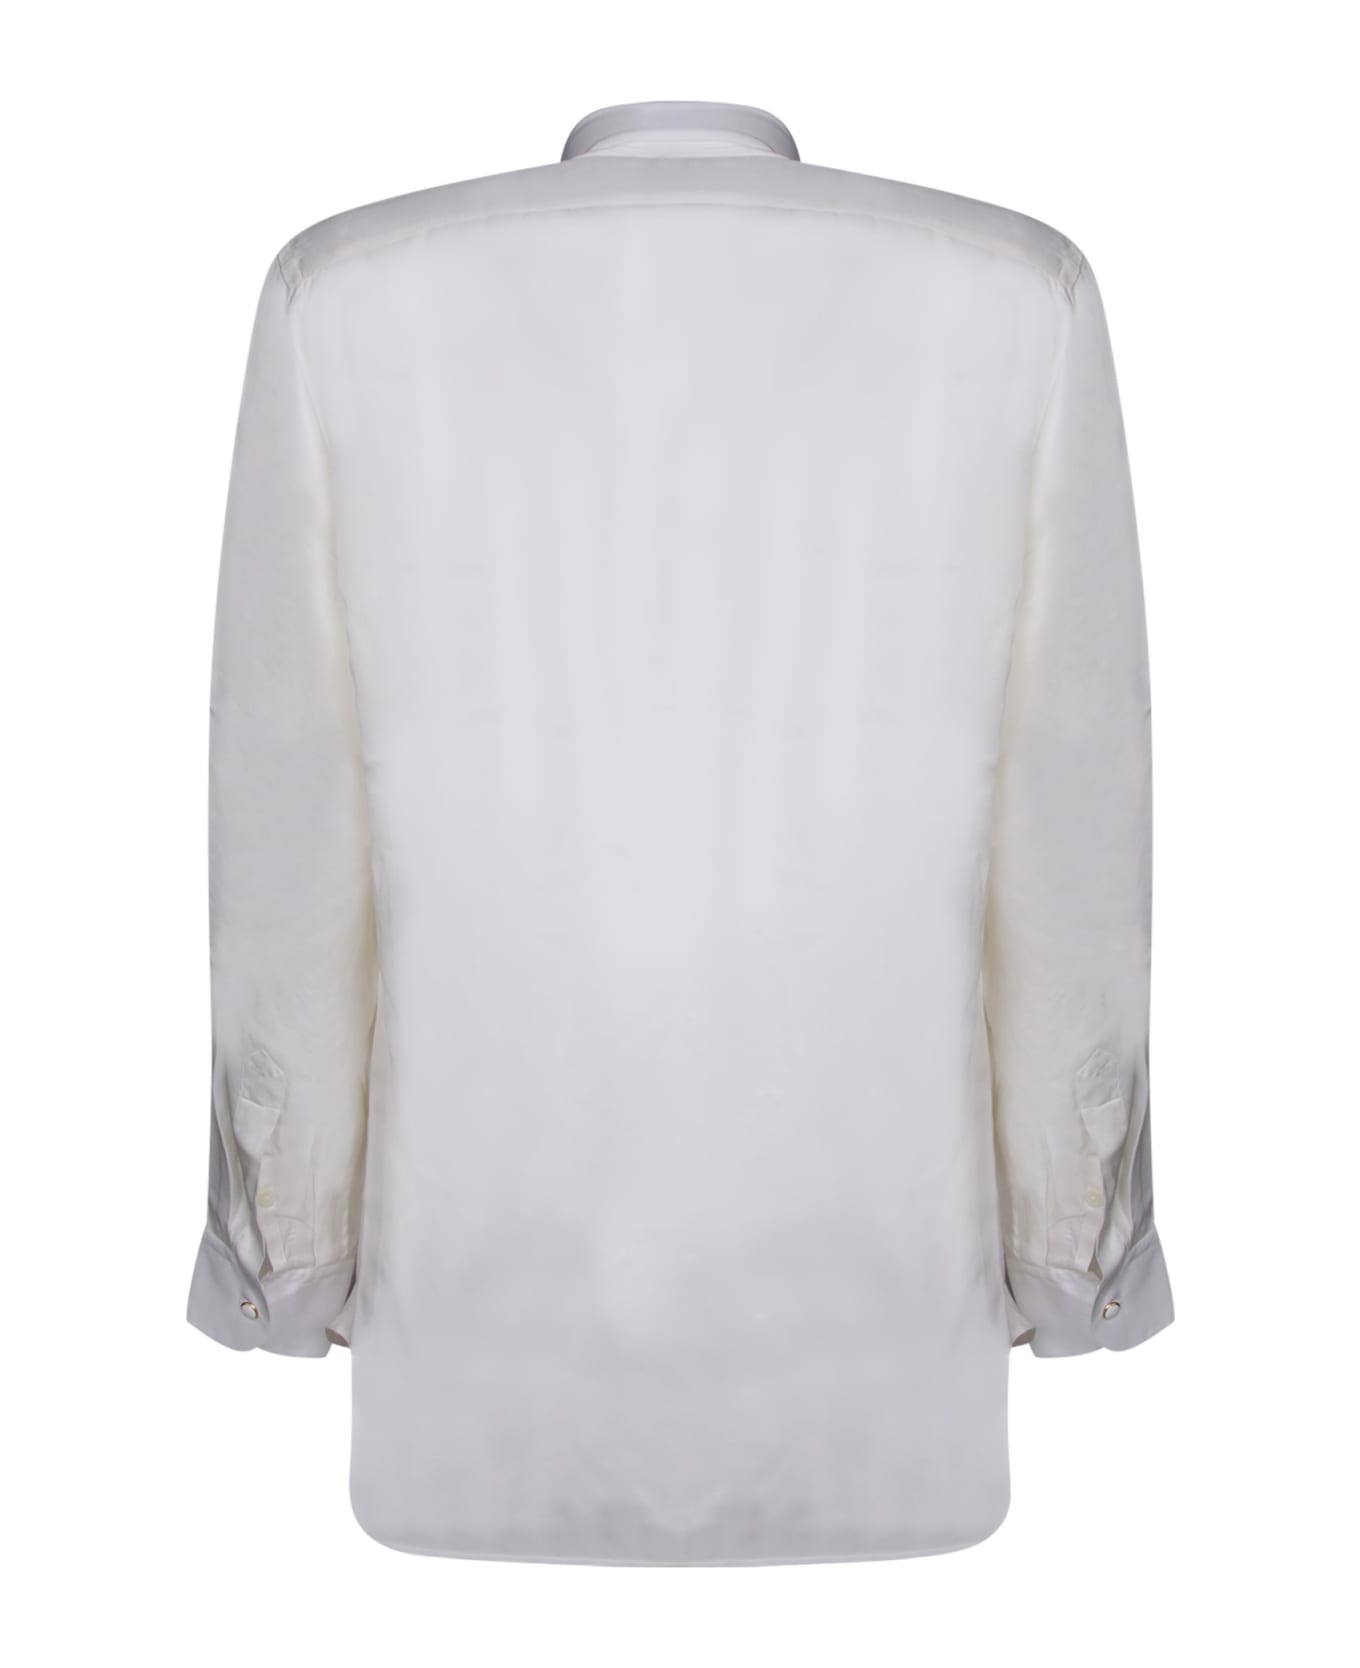 PT Torino Long Sleeves Cream Shirt - White